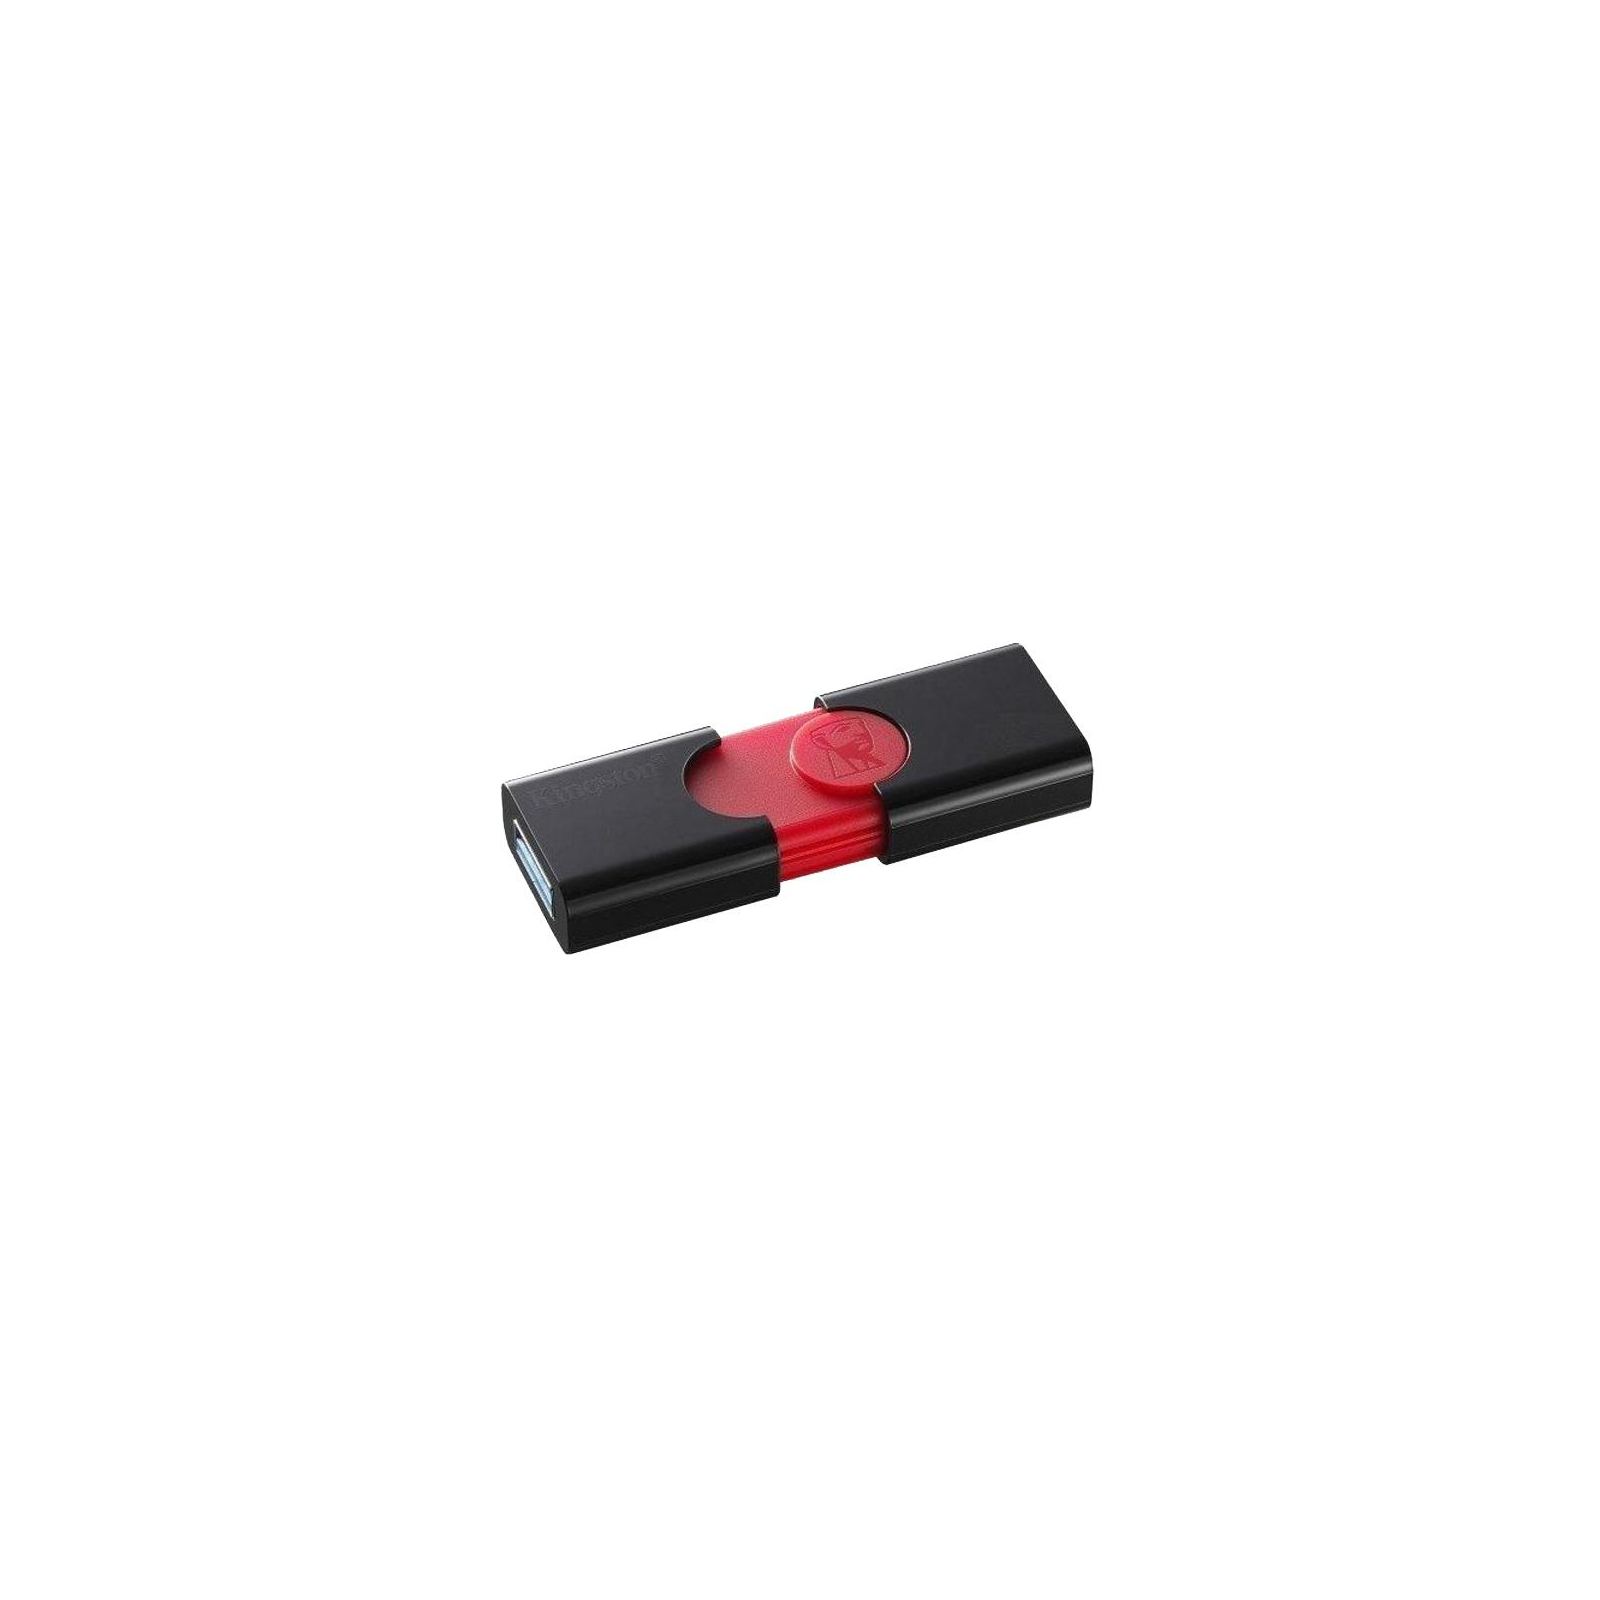 USB флеш накопитель Kingston 32GB DT106 USB 3.0 (DT106/32GB) изображение 2